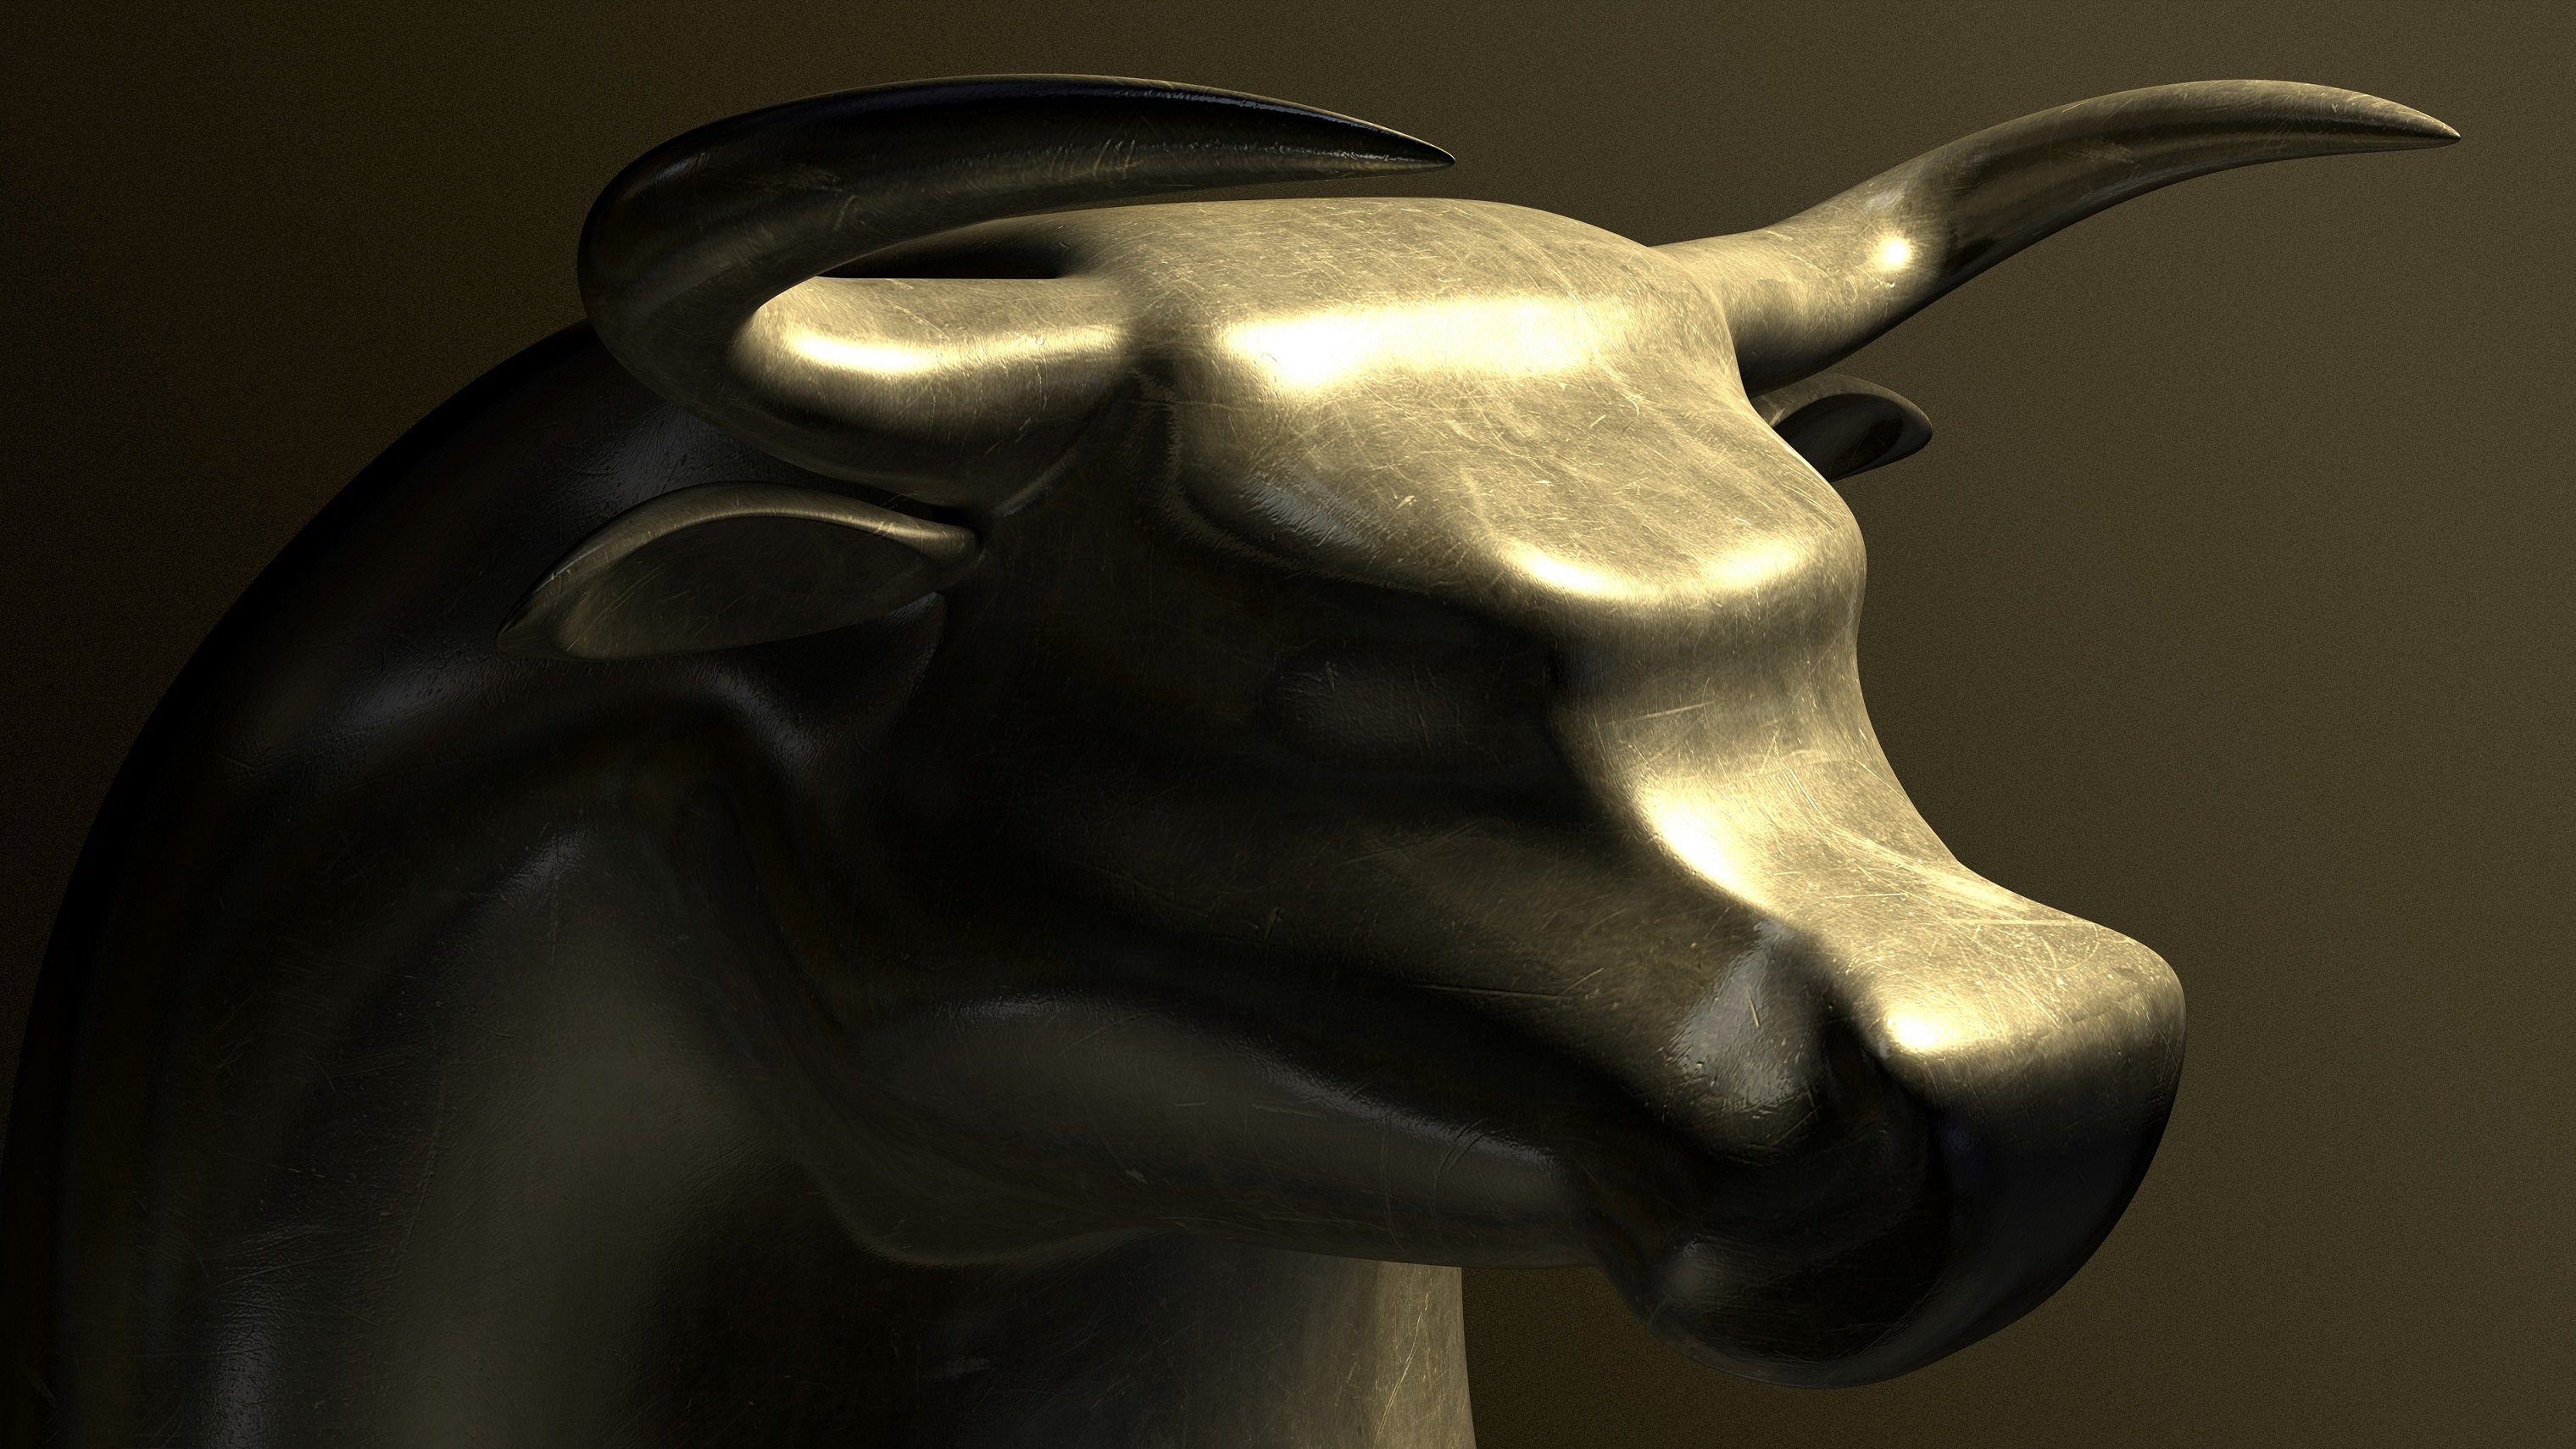 bullish bull confident executive stocks shares market